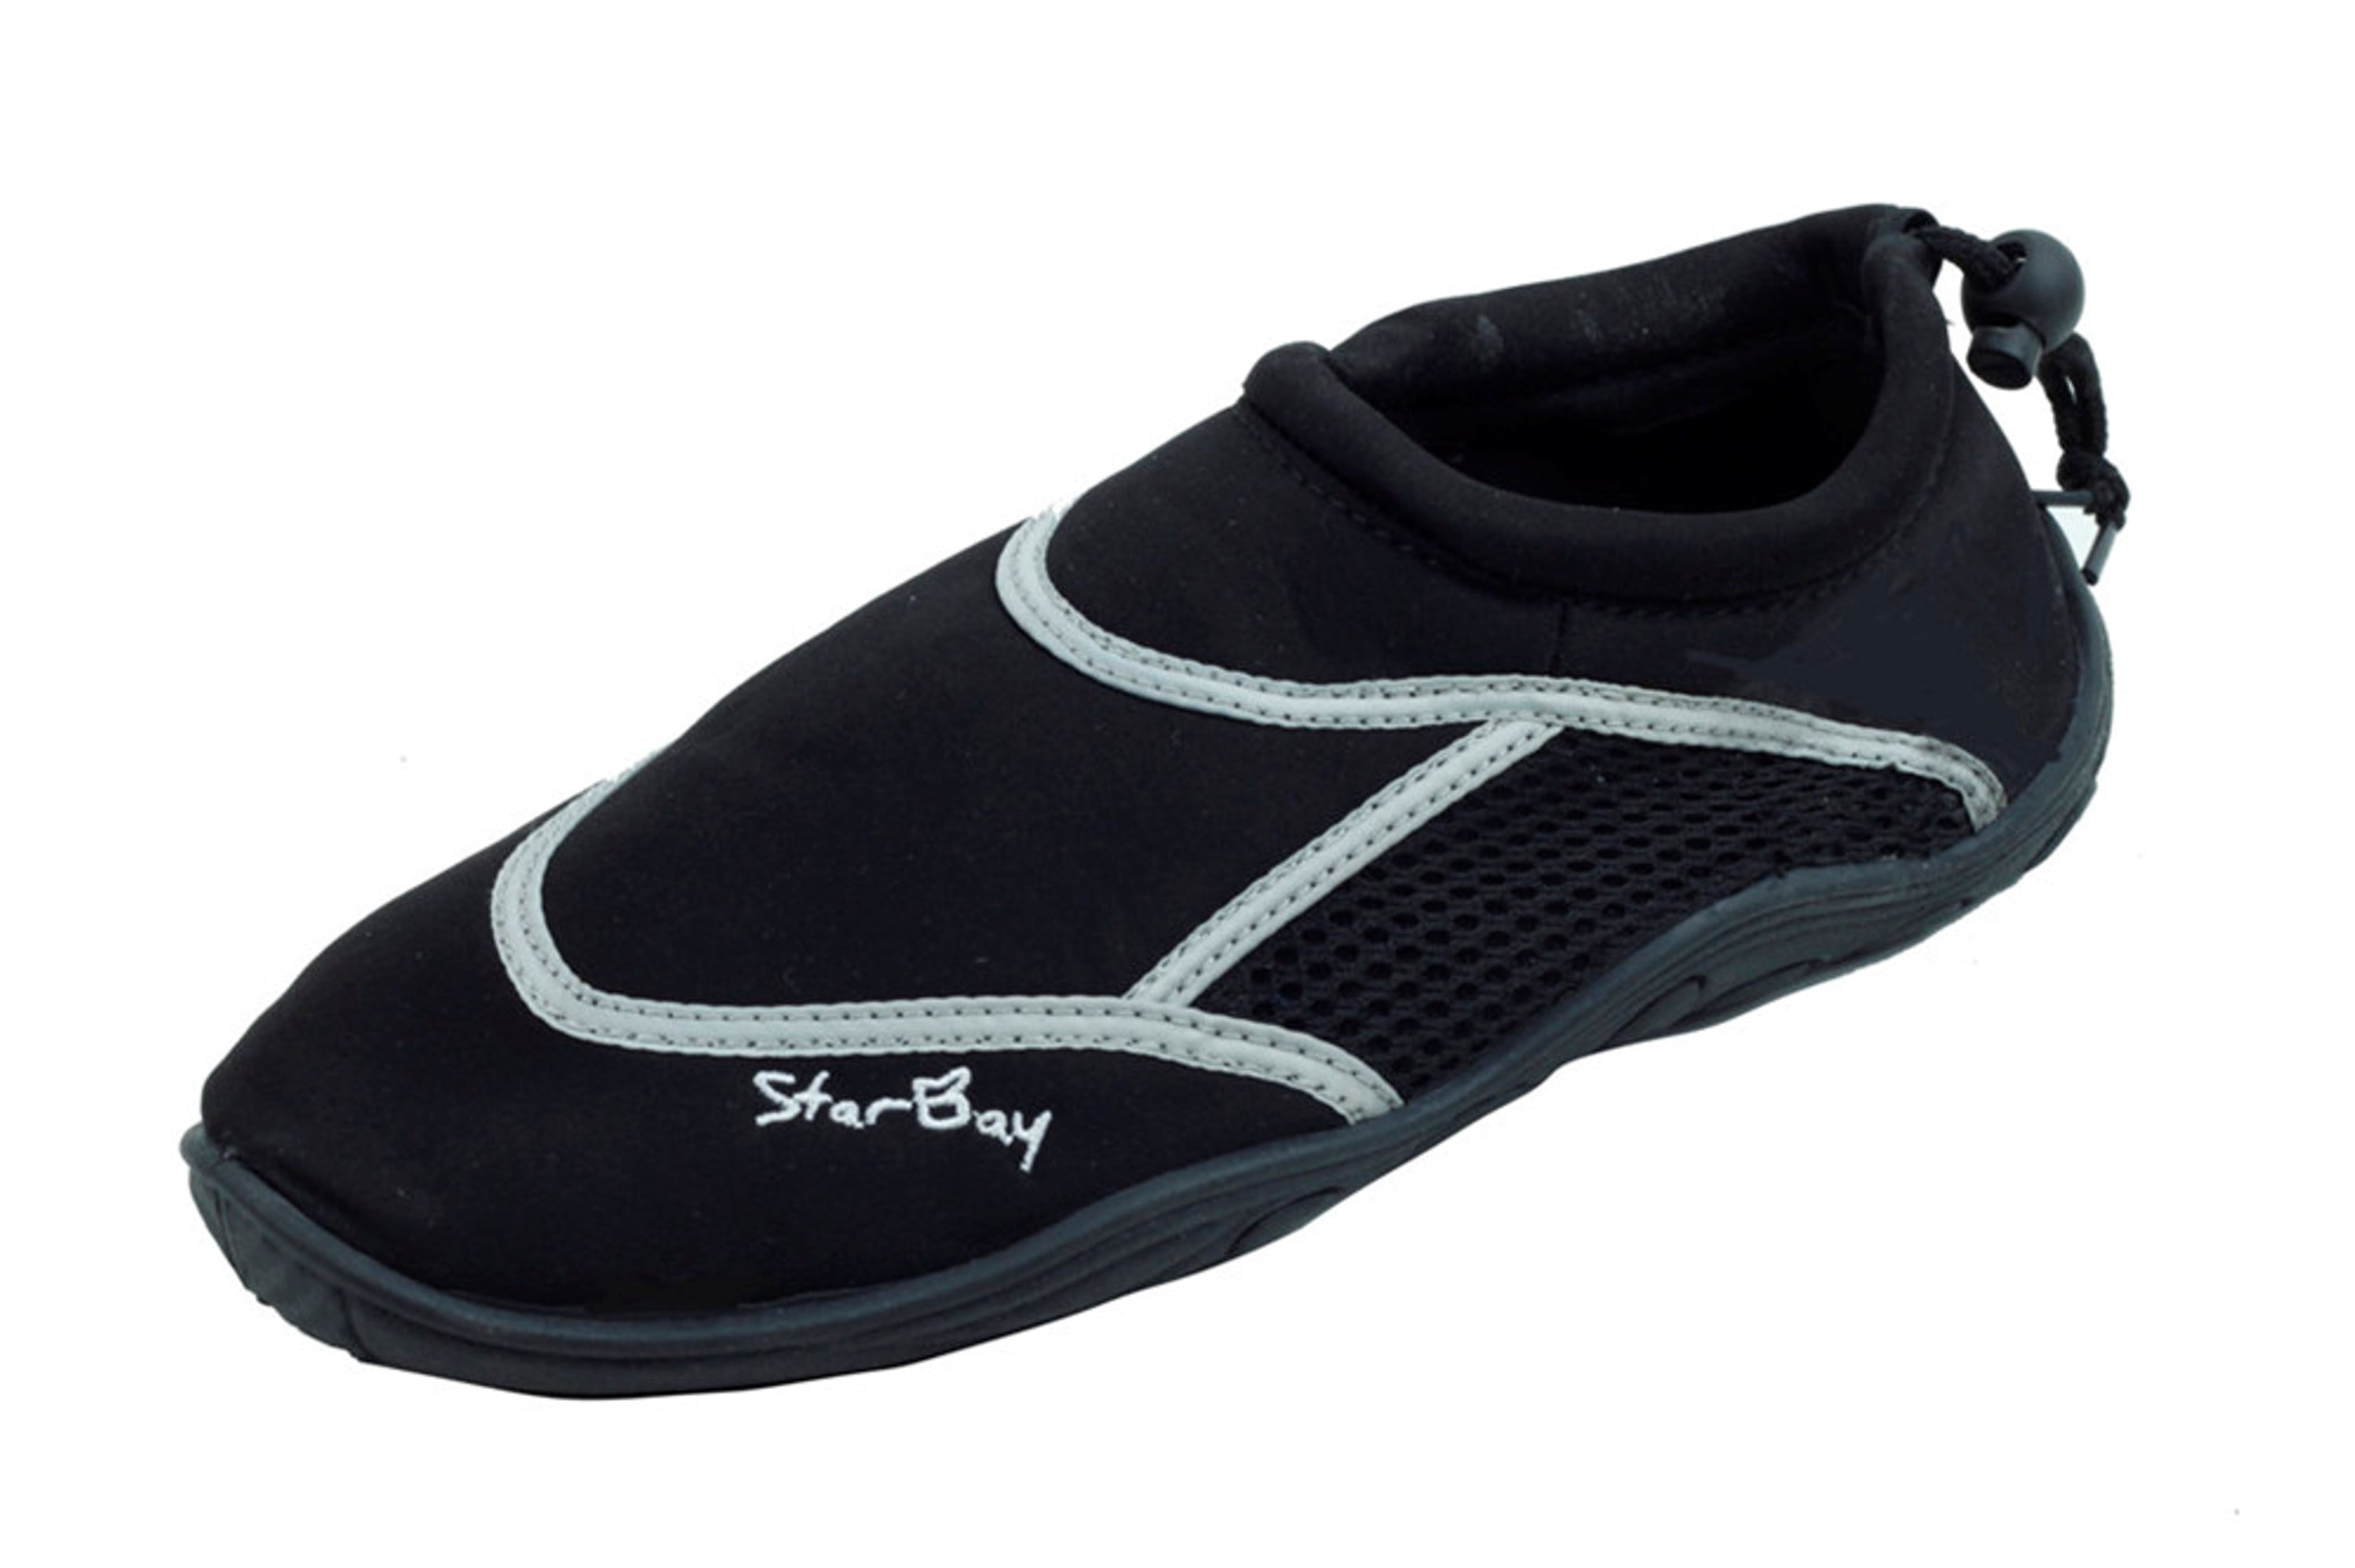 Star Bay - New StarBay Brand Men's Athletic Water Shoes Aqua Socks 5902 ...